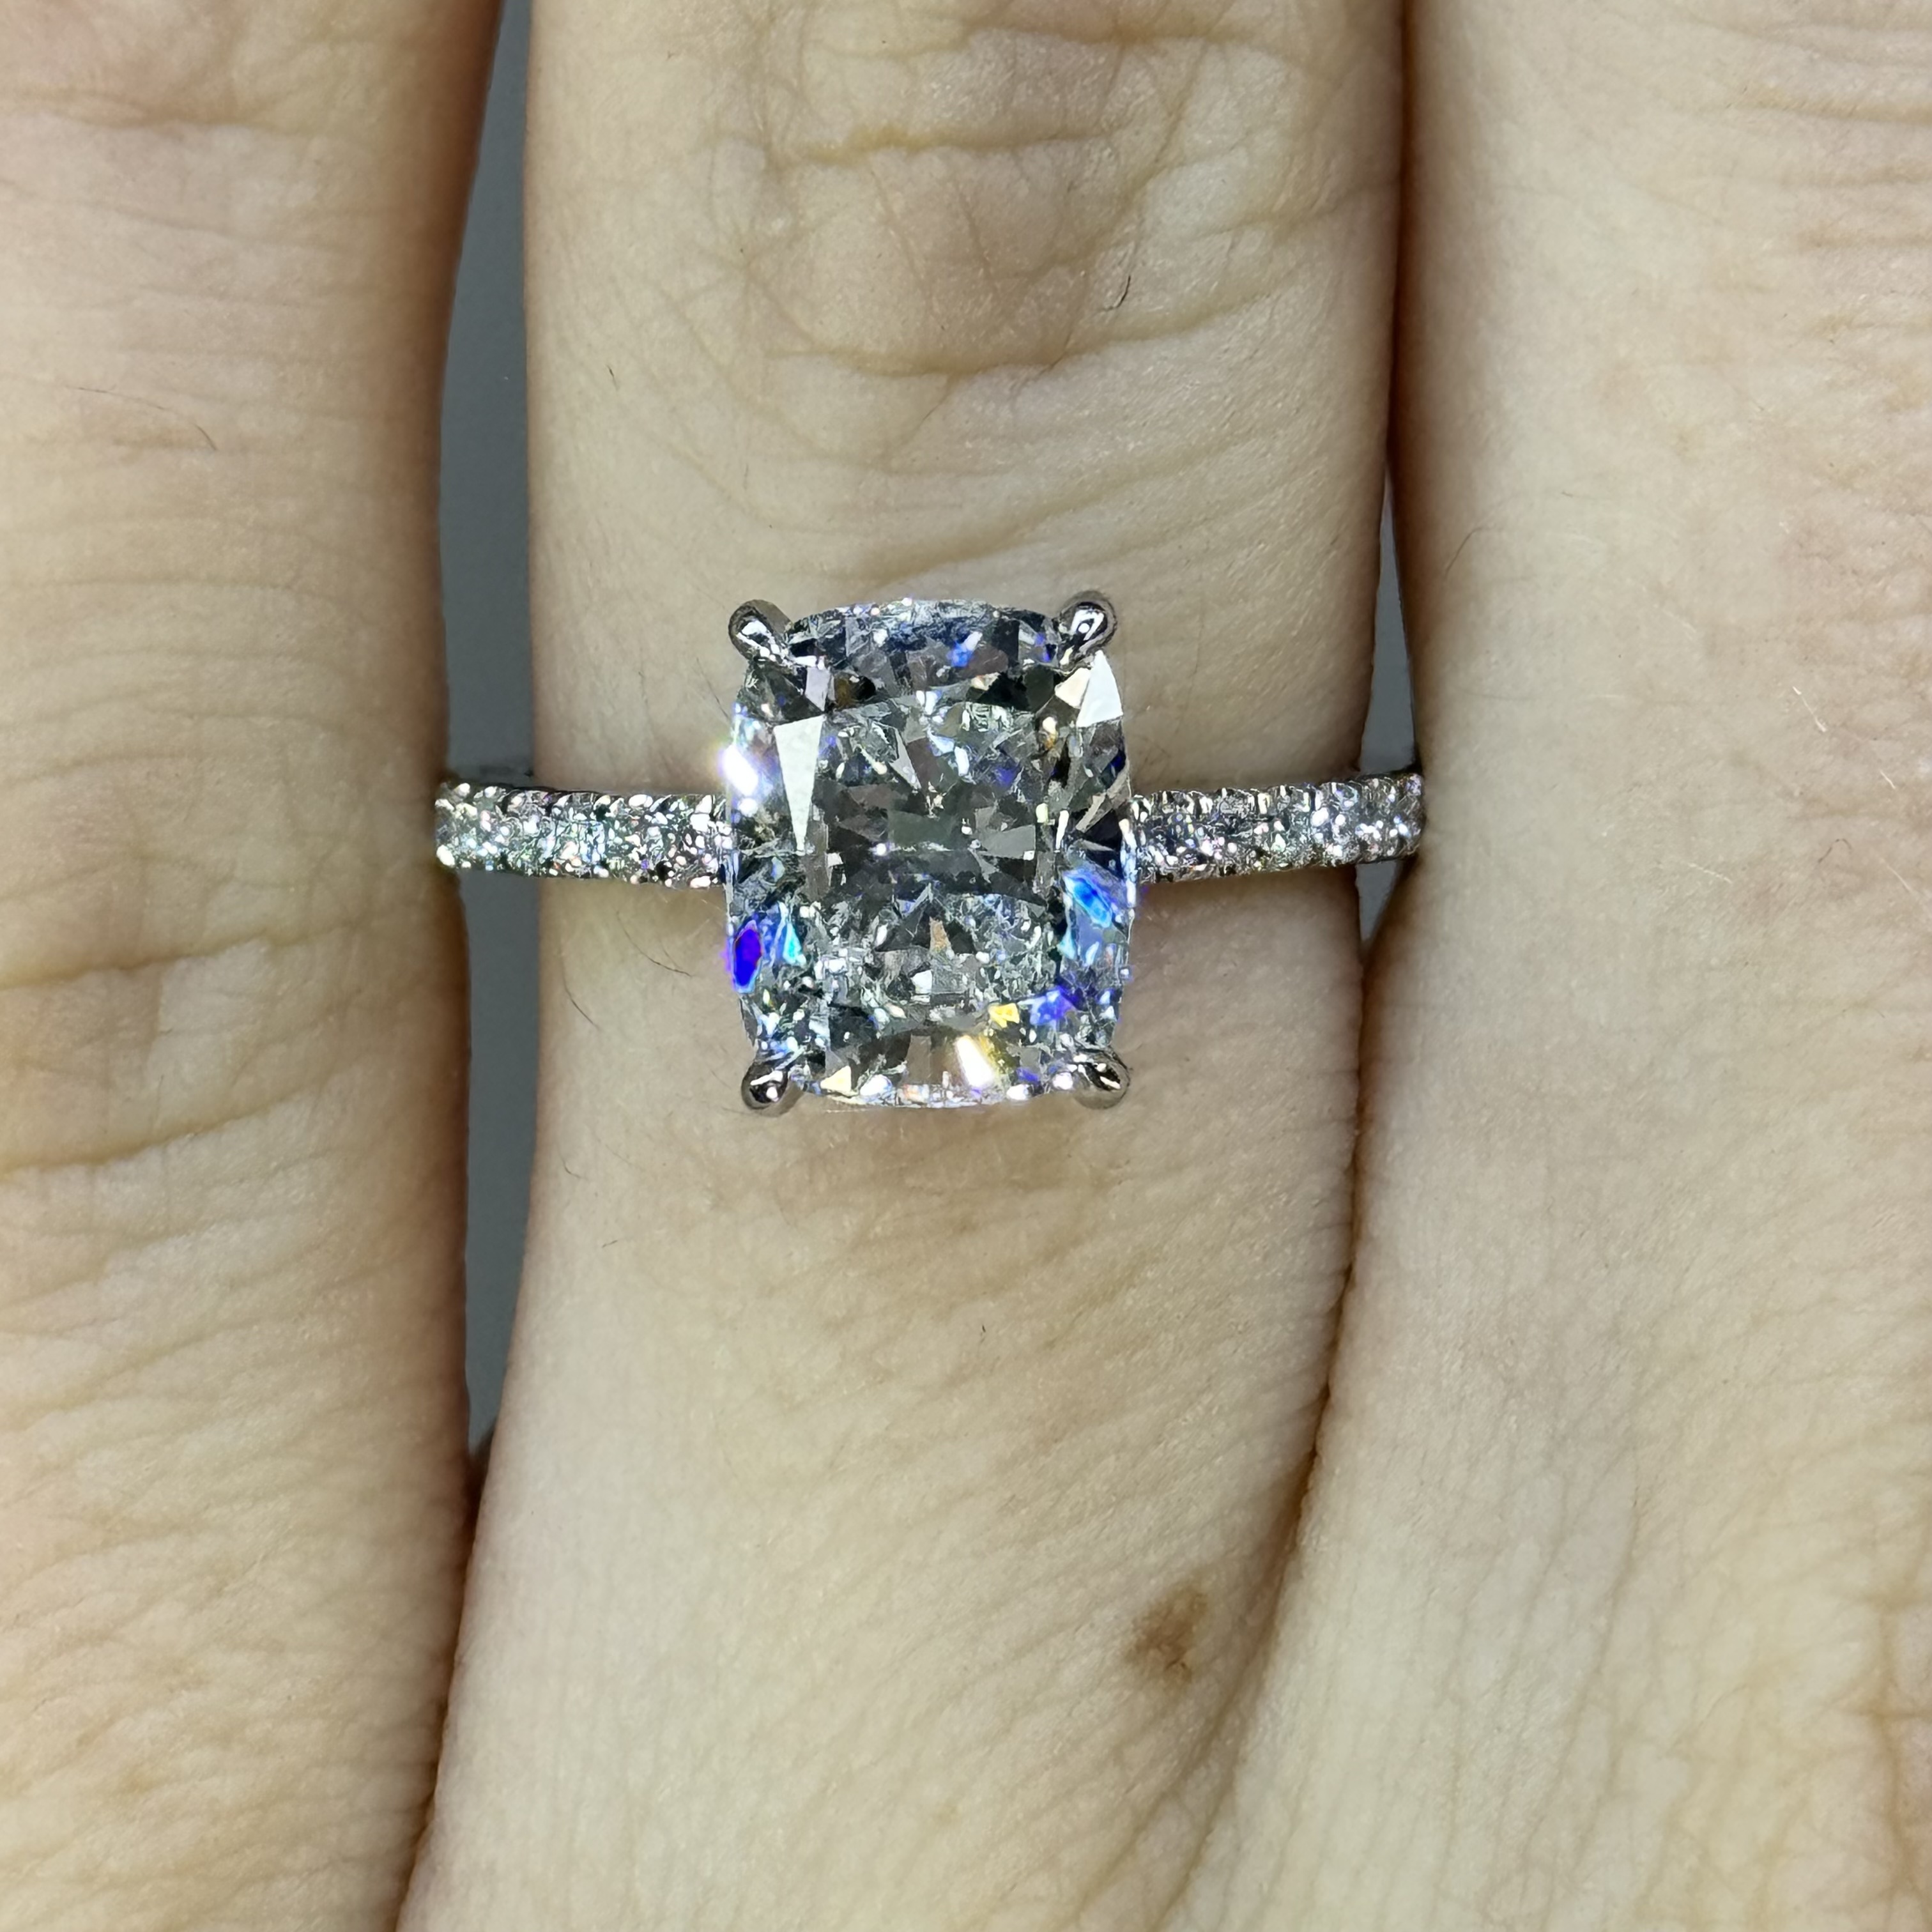 GIA 2.58 E VS2 Cushion "Harlow" Engagement Ring Image 2 Forever Diamonds New York, NY